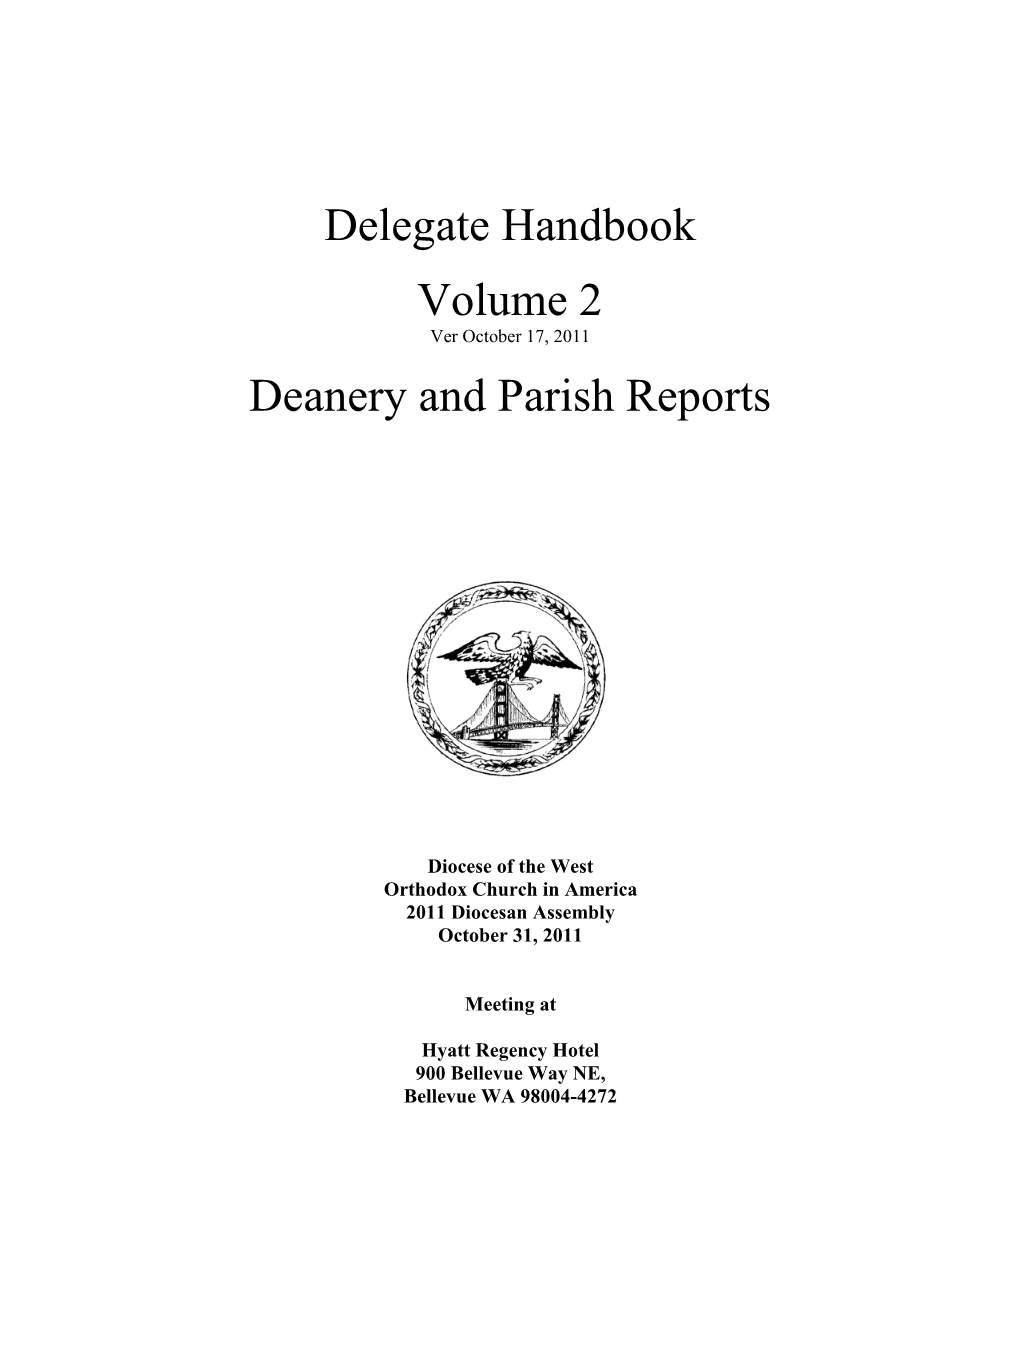 Delegate Handbook Volume 2 Deanery and Parish Reports